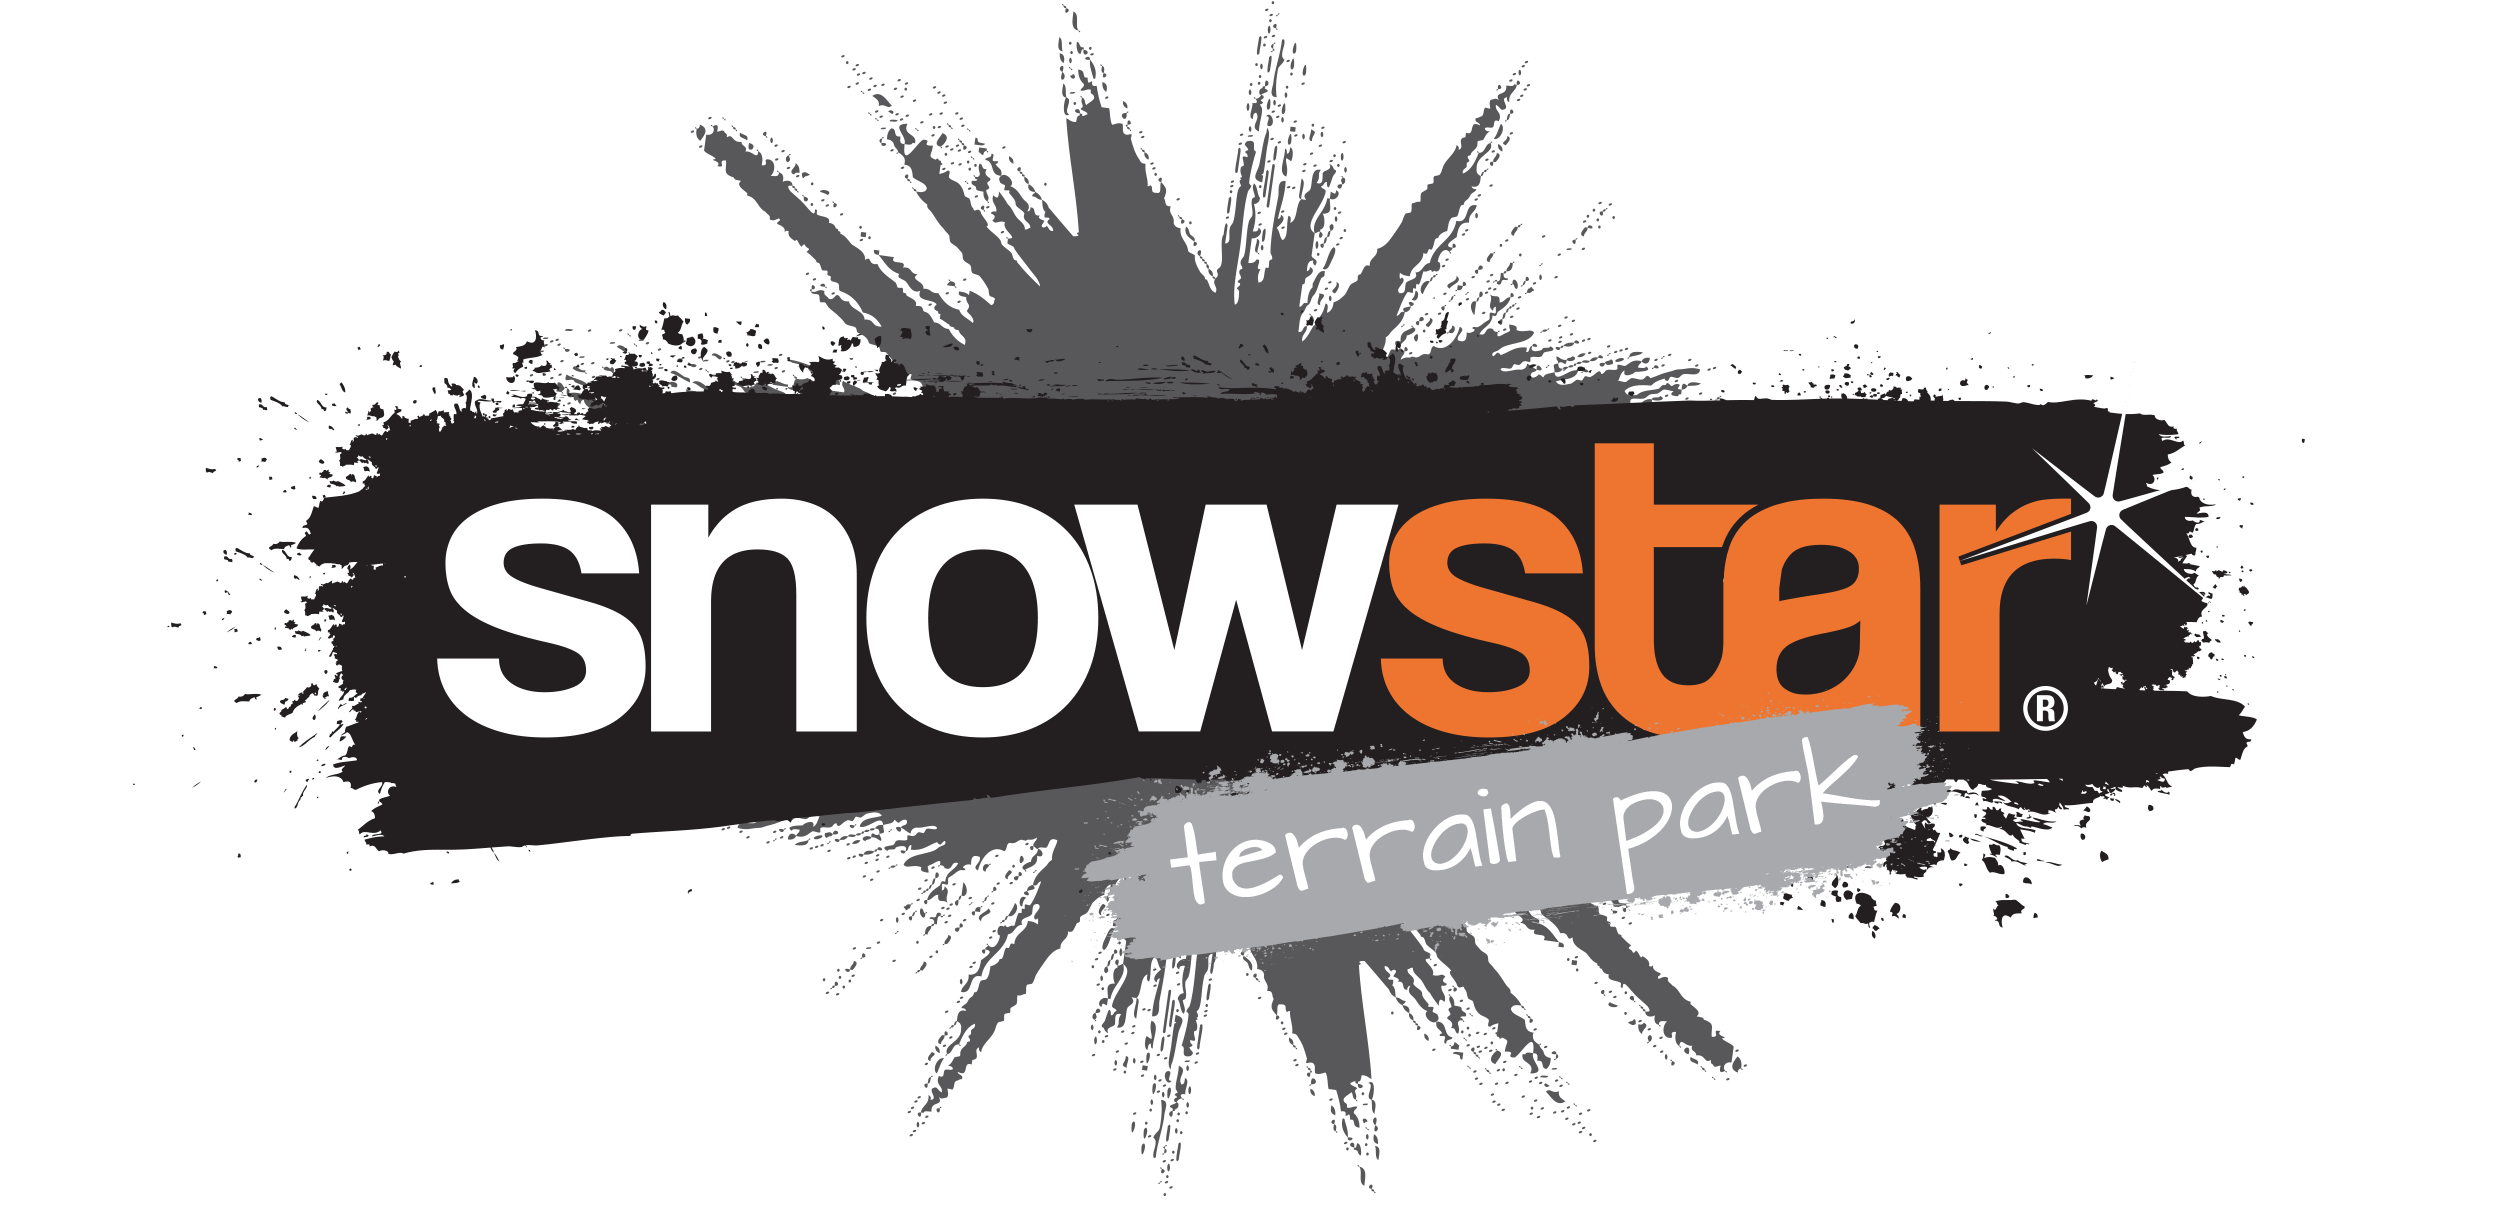 Snow Star Logo - Snowstar Winter Sports Park|terrain-park